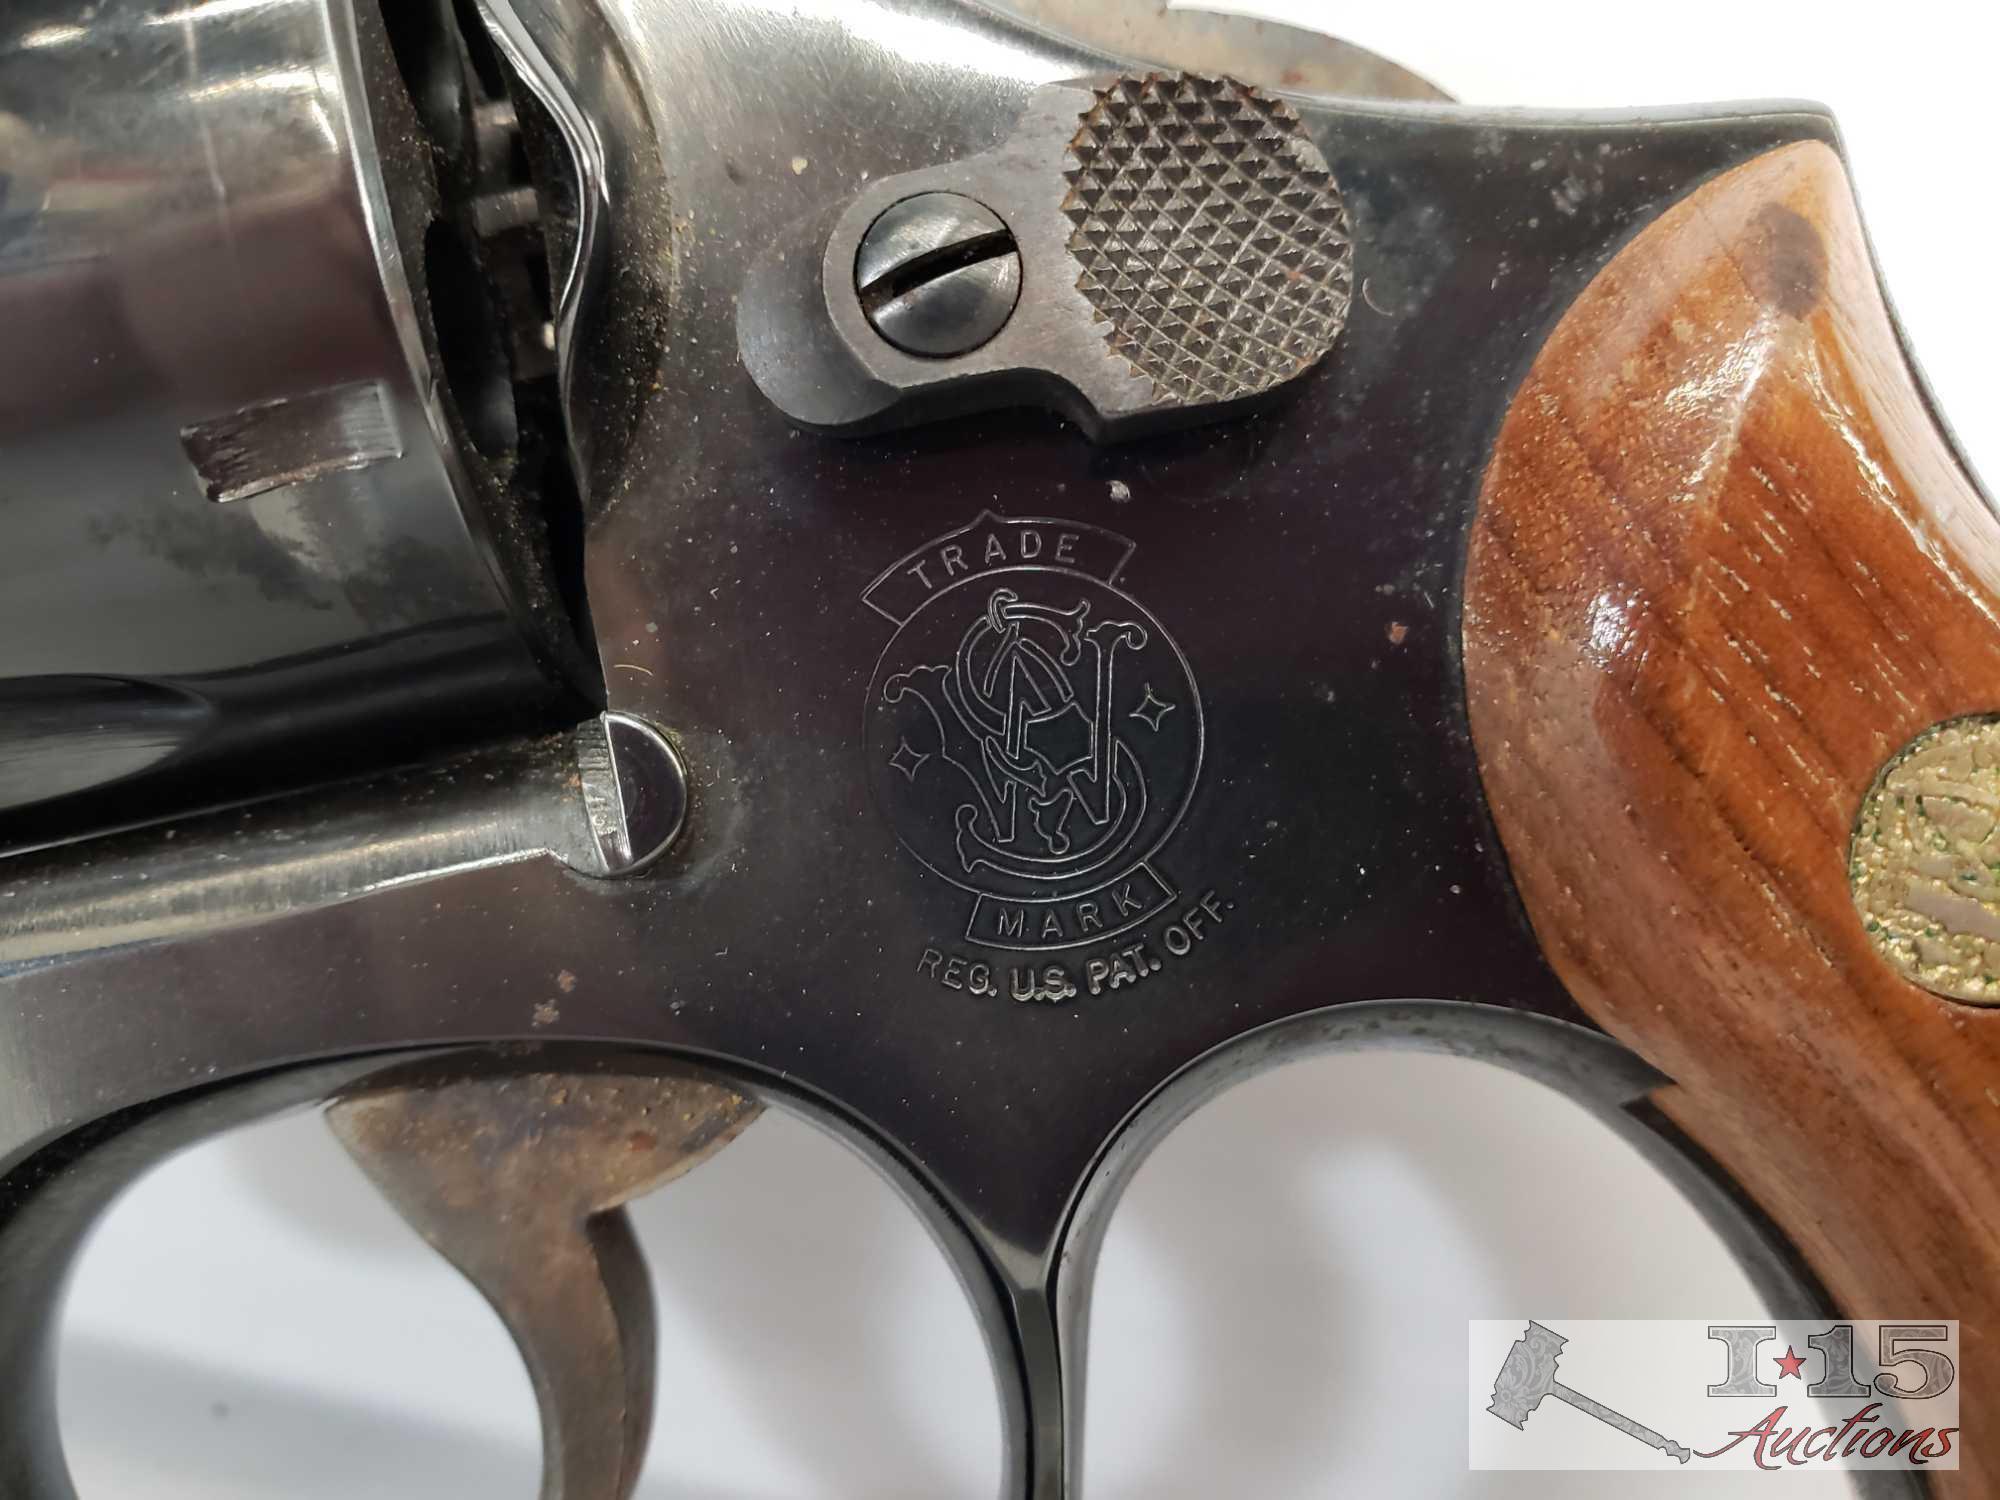 Smith & Wesson Model 581 Revolver .357